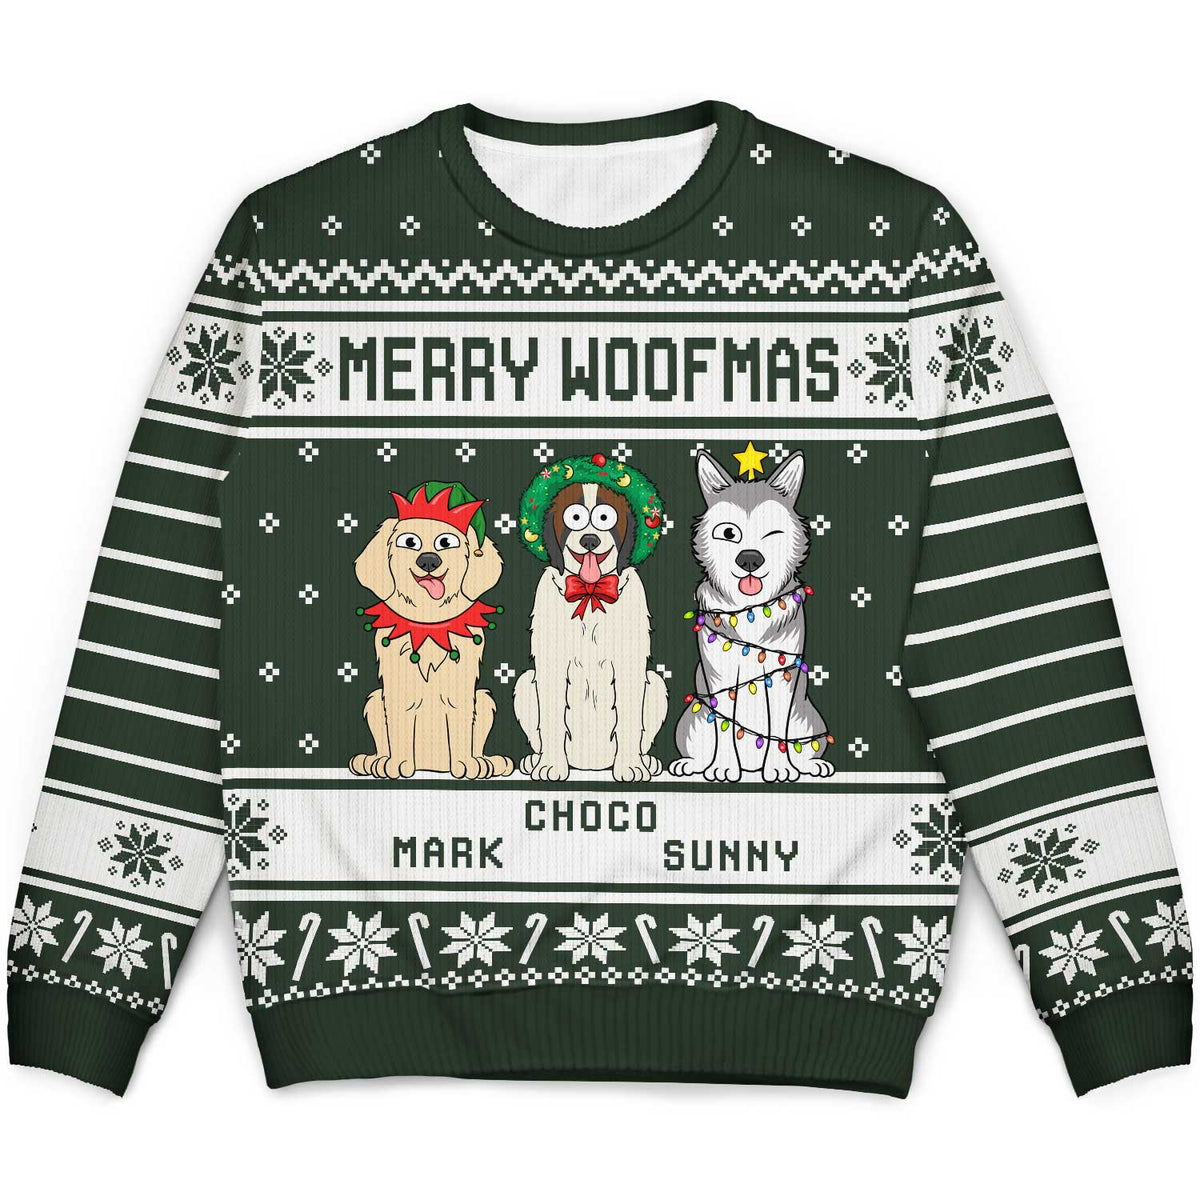 Merry Woofmas - Christmas Gift For Dog Lovers - Personalized Unisex Ug ...